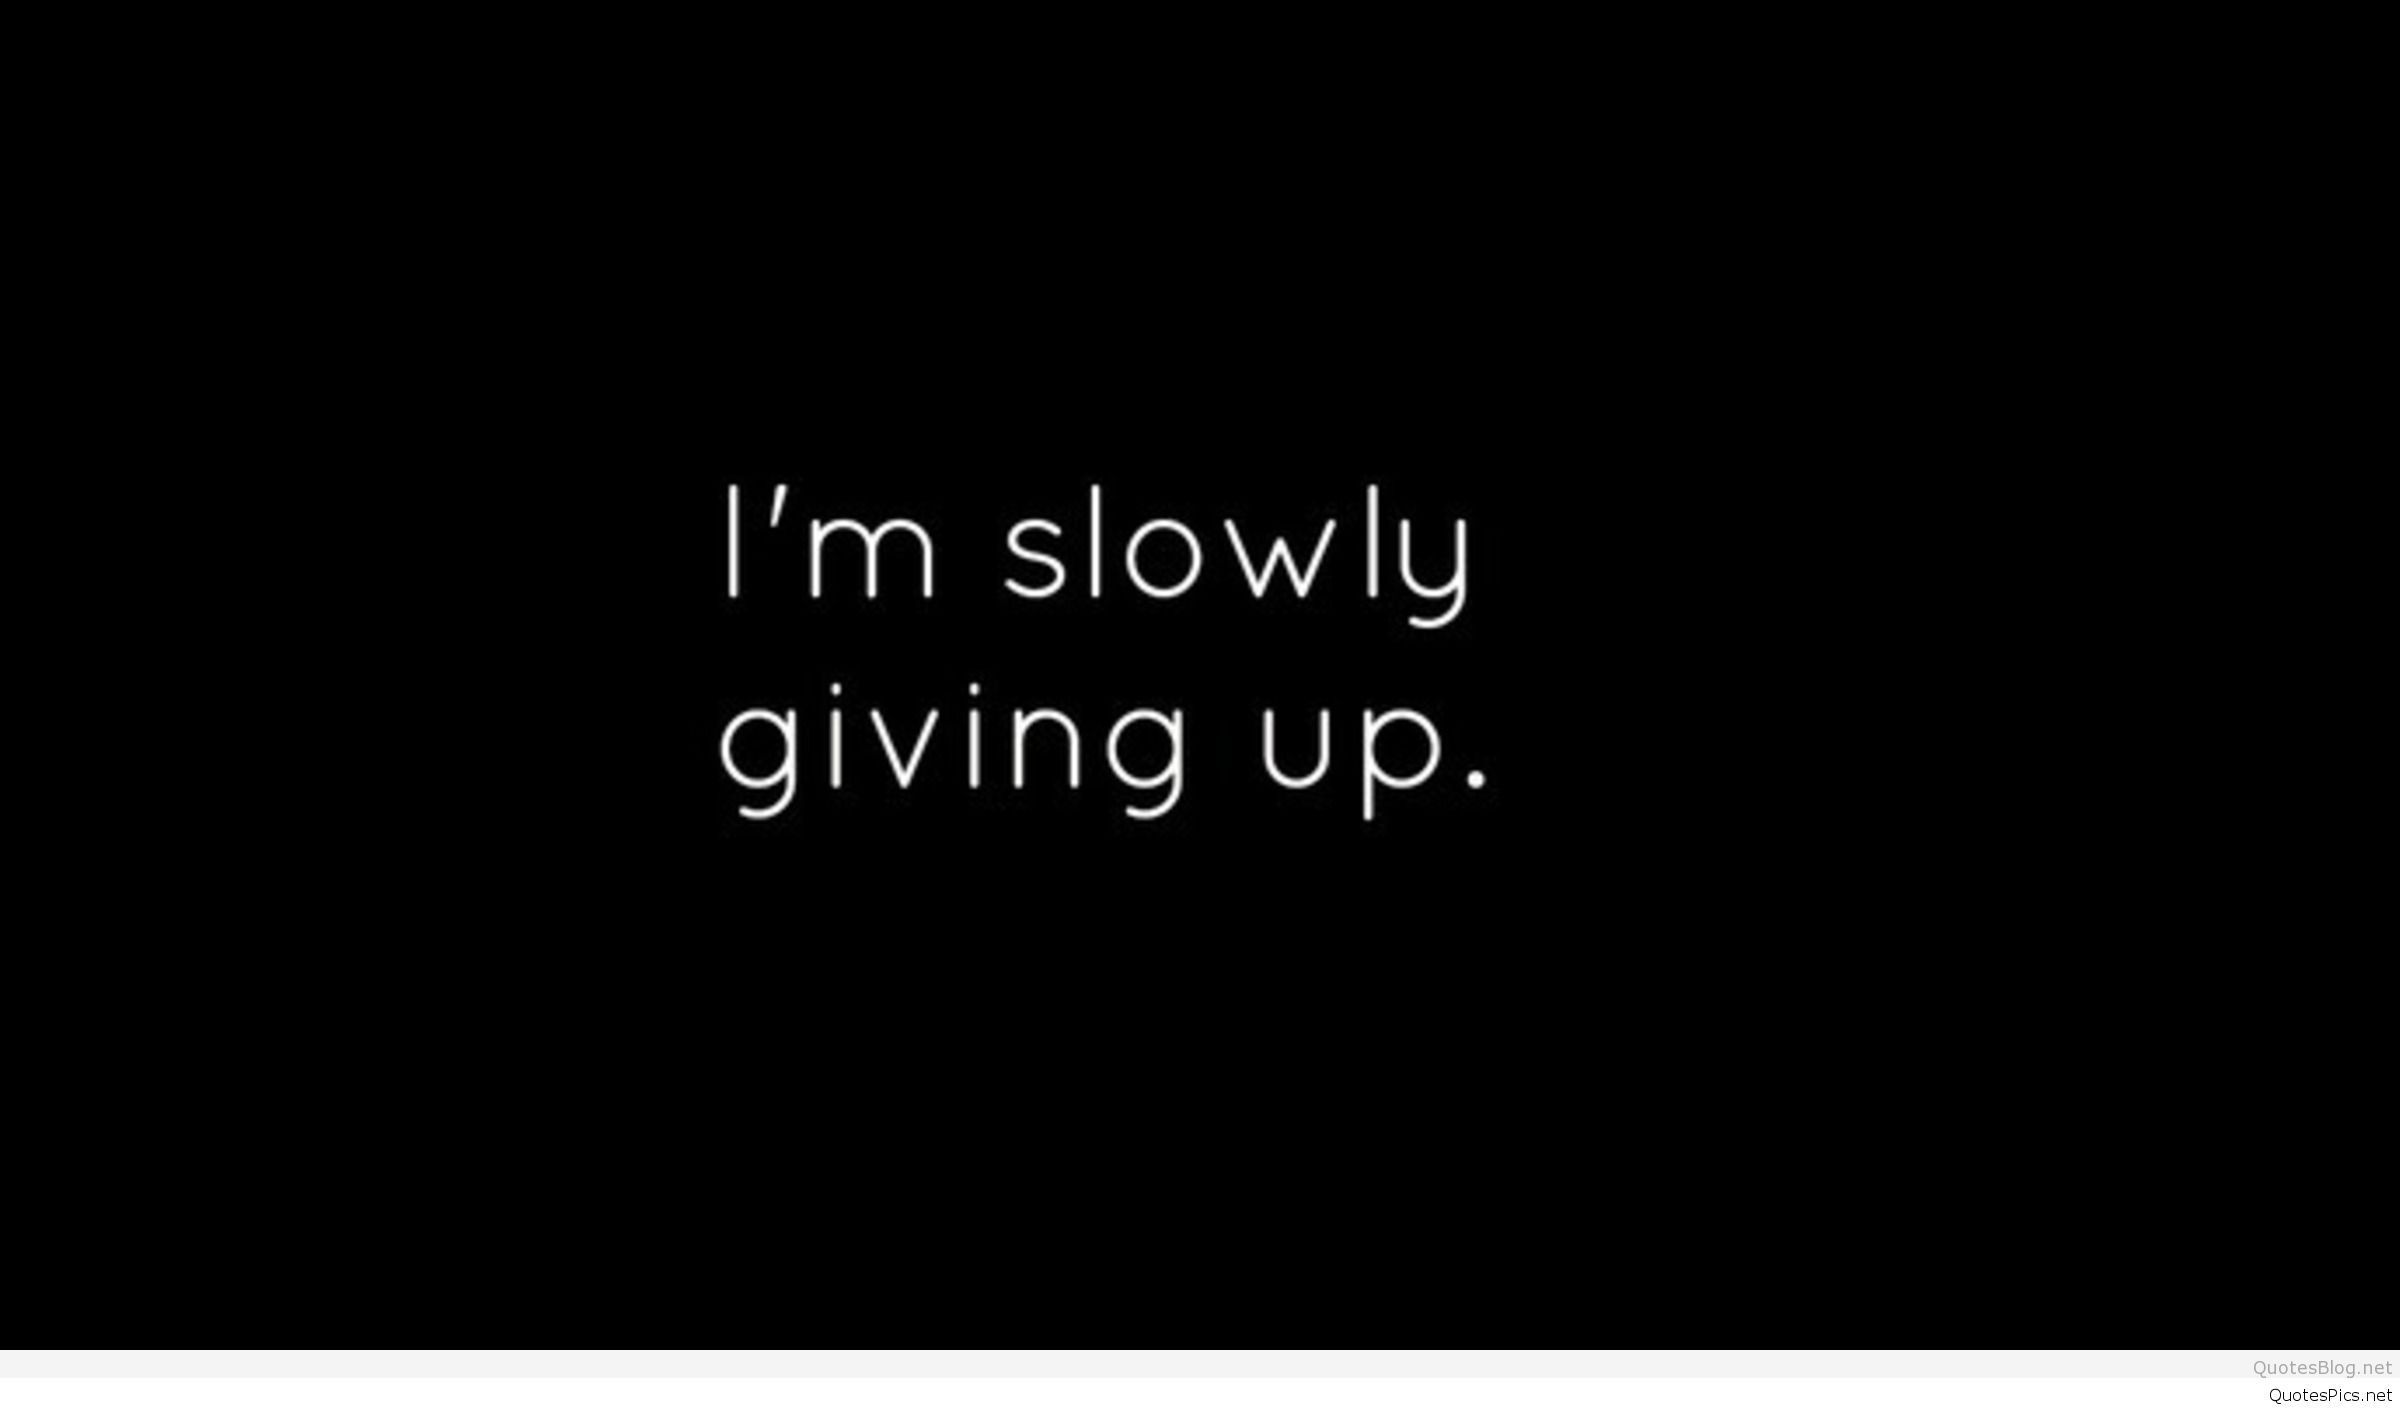 I'm slowly giving up. - Sad quotes, depression